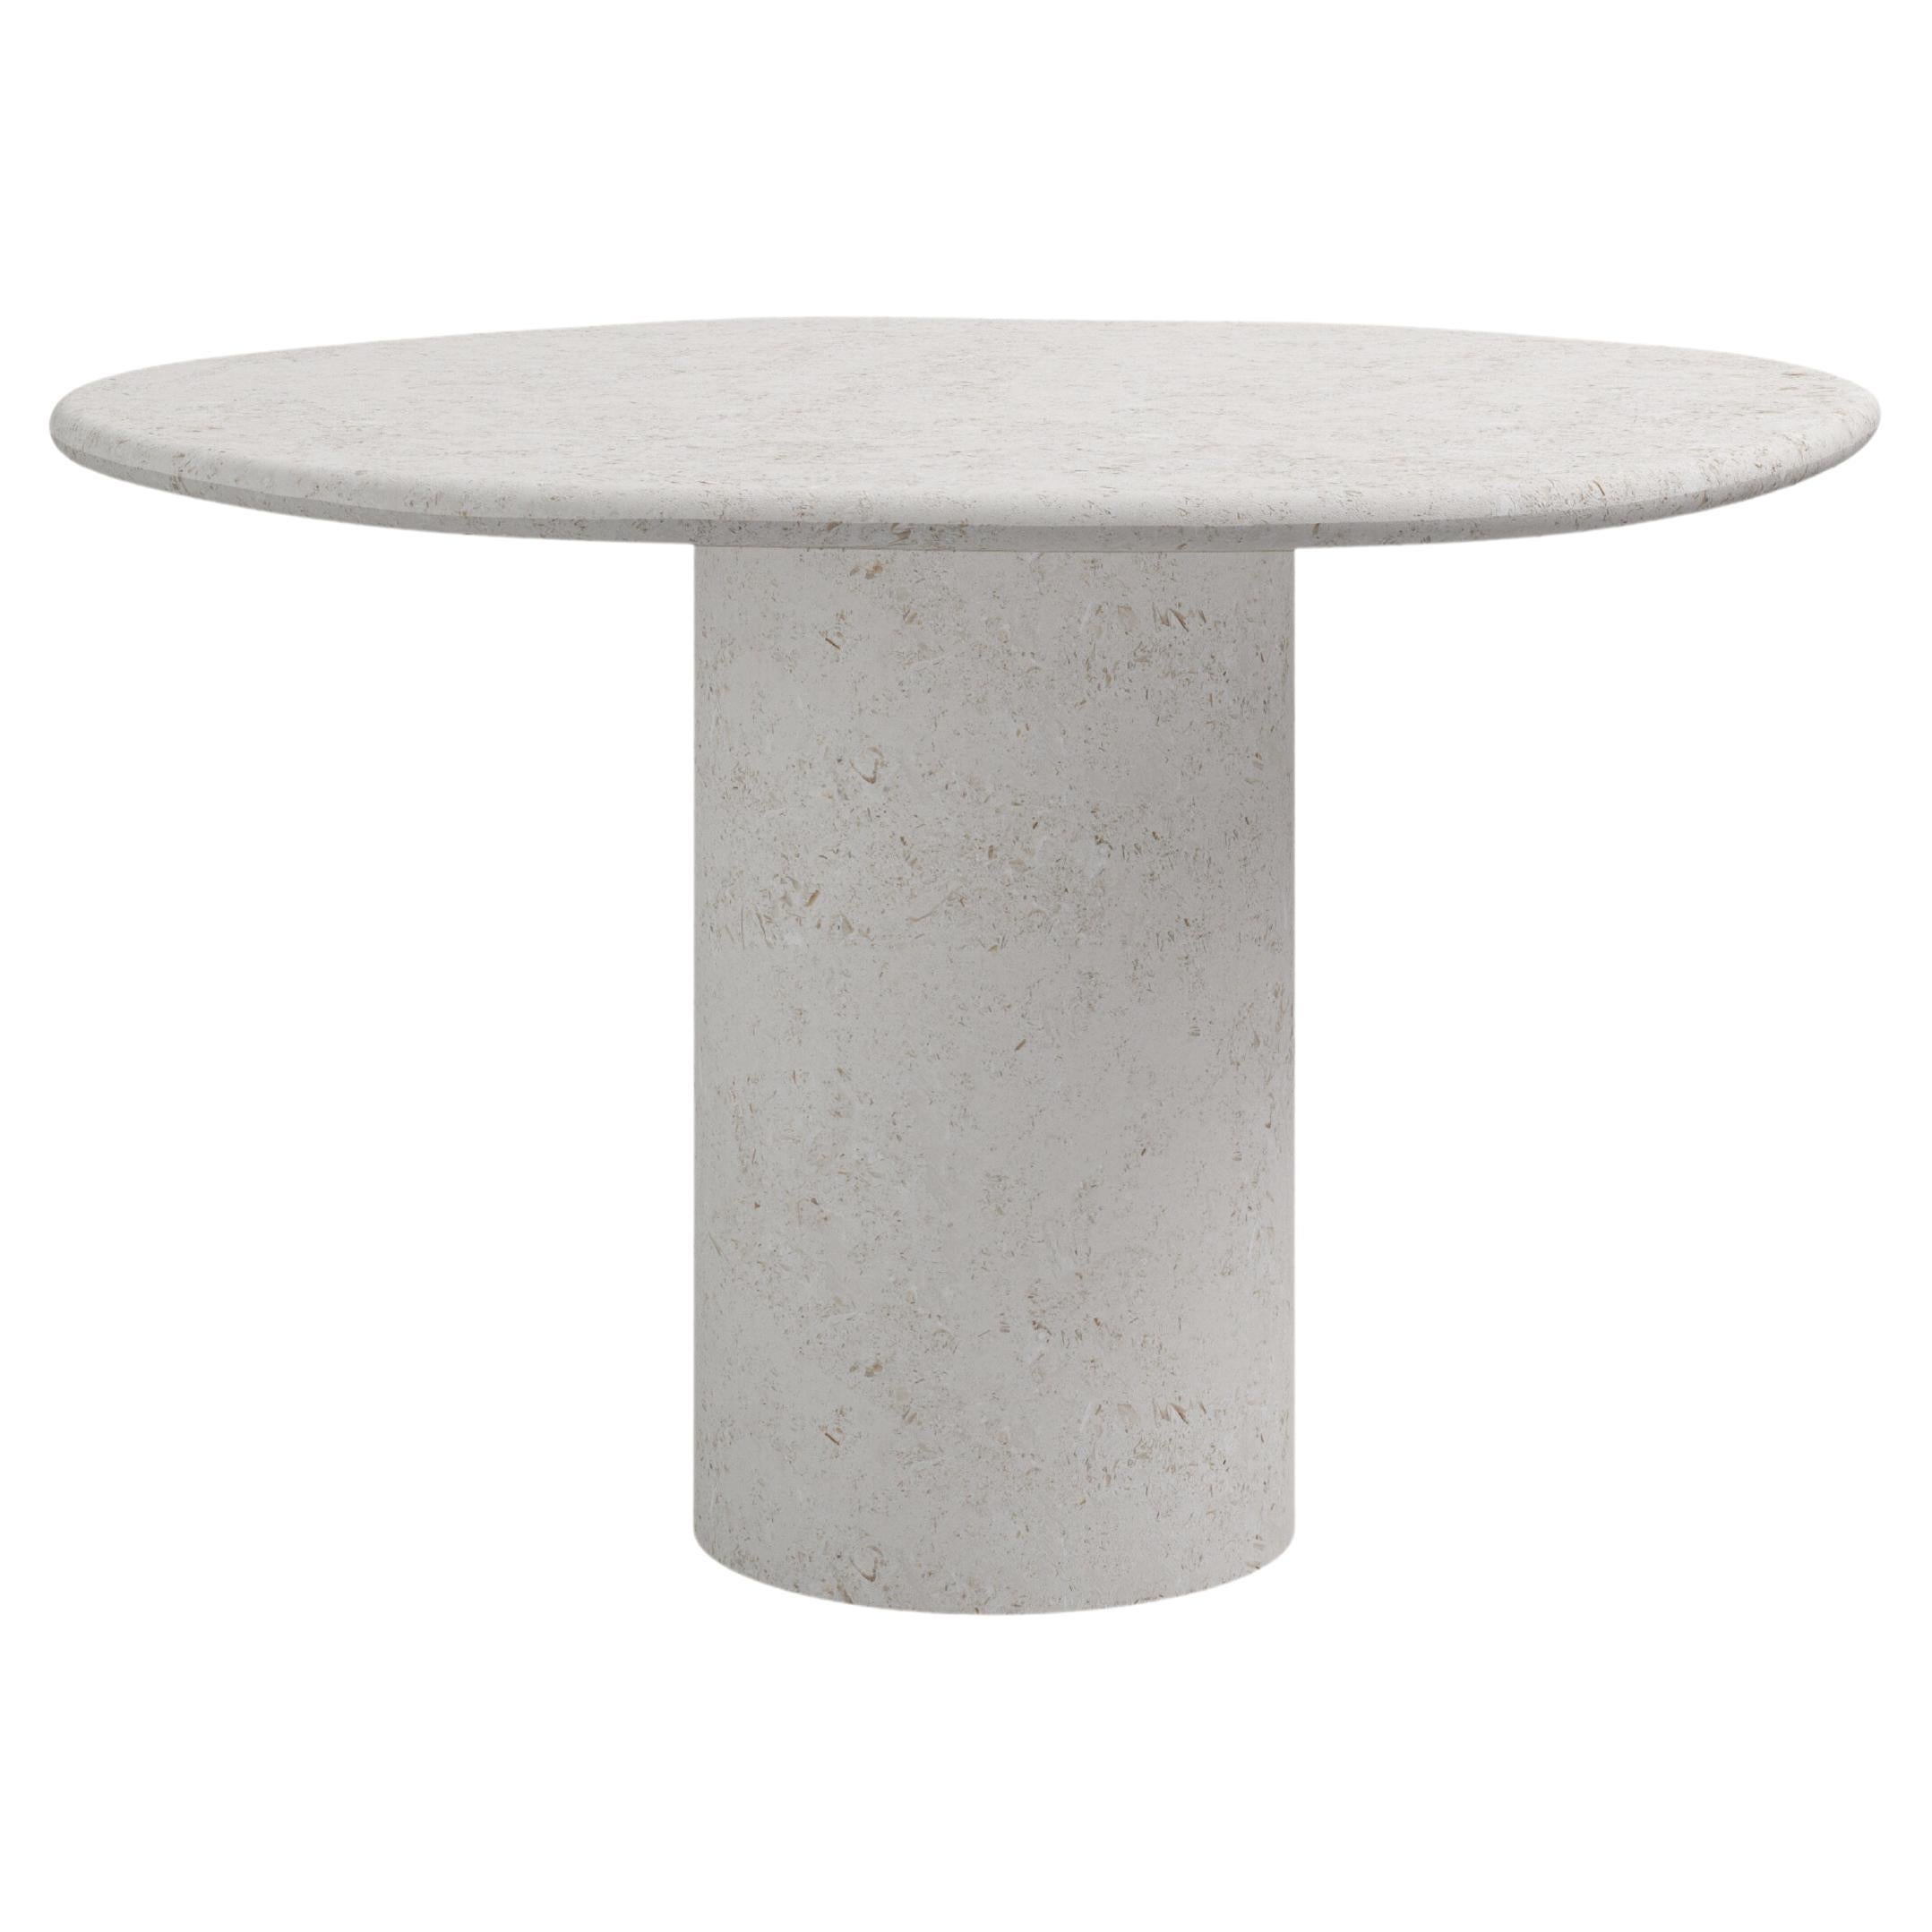 FORM(LA) Lago Round Dining Table 54”L x 54”W x 30”H Limestone Oceano For Sale